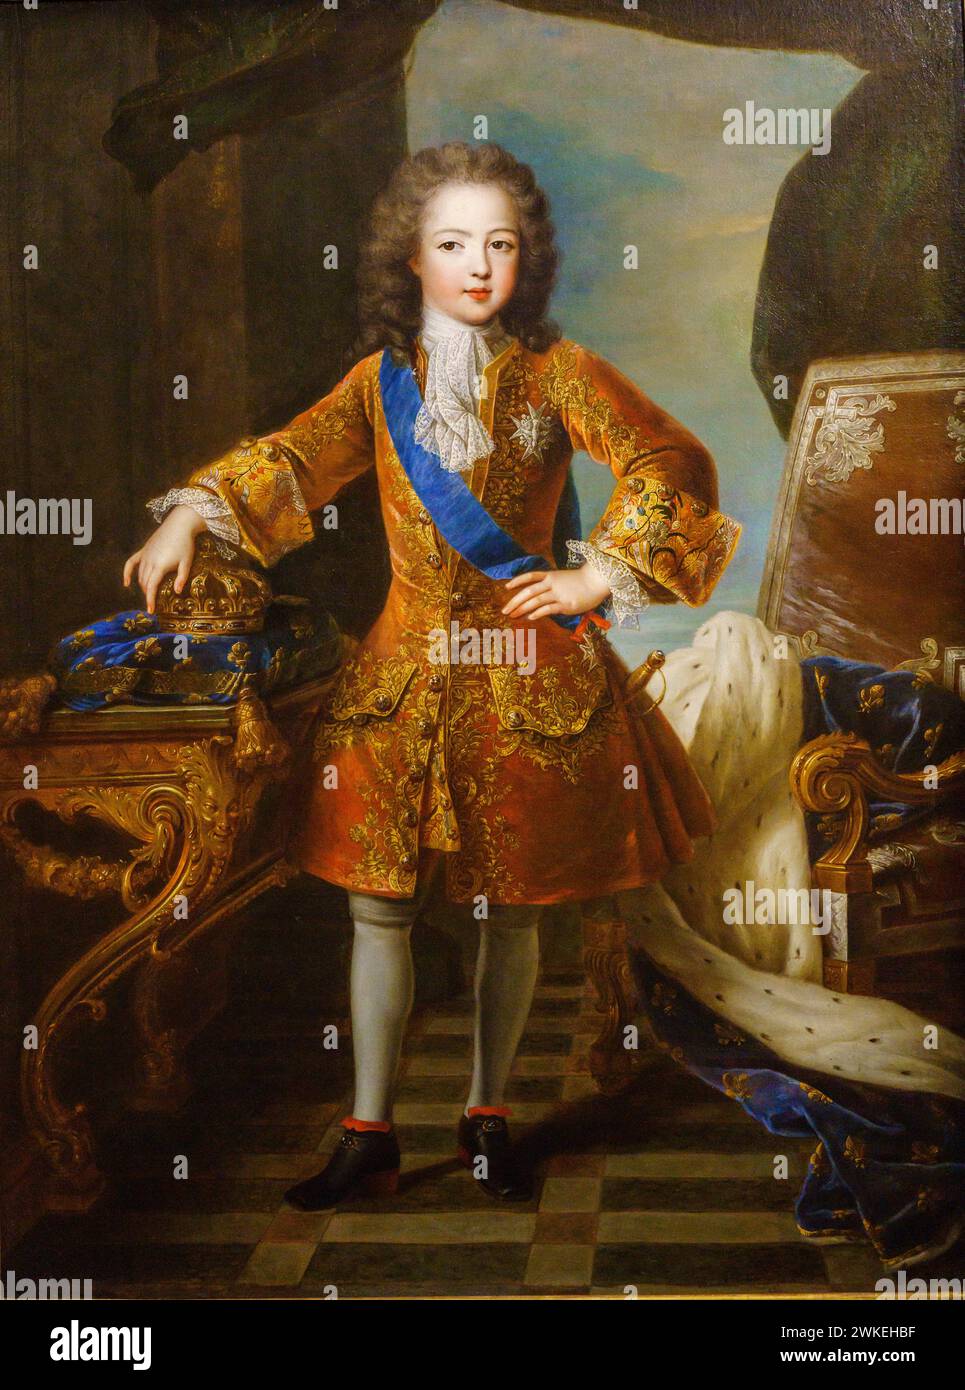 Louis XV of France, 1715, Pierre Gobert and studio, Nins, portraits of children s. XVI-XIX, Sa Bassa Blanca Museum (msbb). Yannick Vu and Ben Jakober , Alcudia, Majorca, Spain. Stock Photo